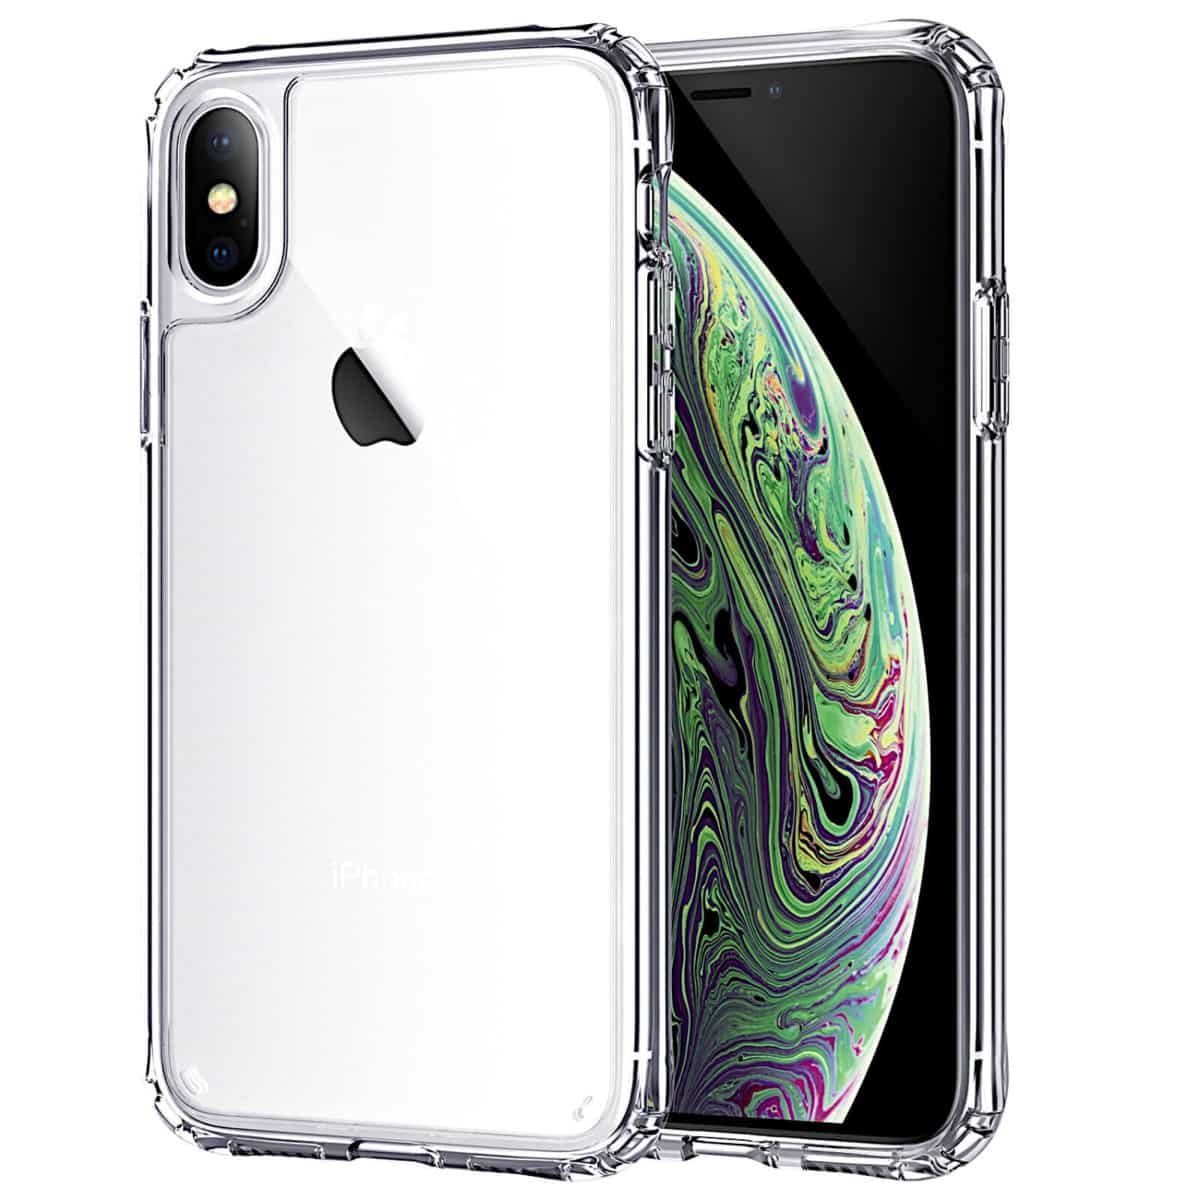 iphone x xs max acryllic clear case